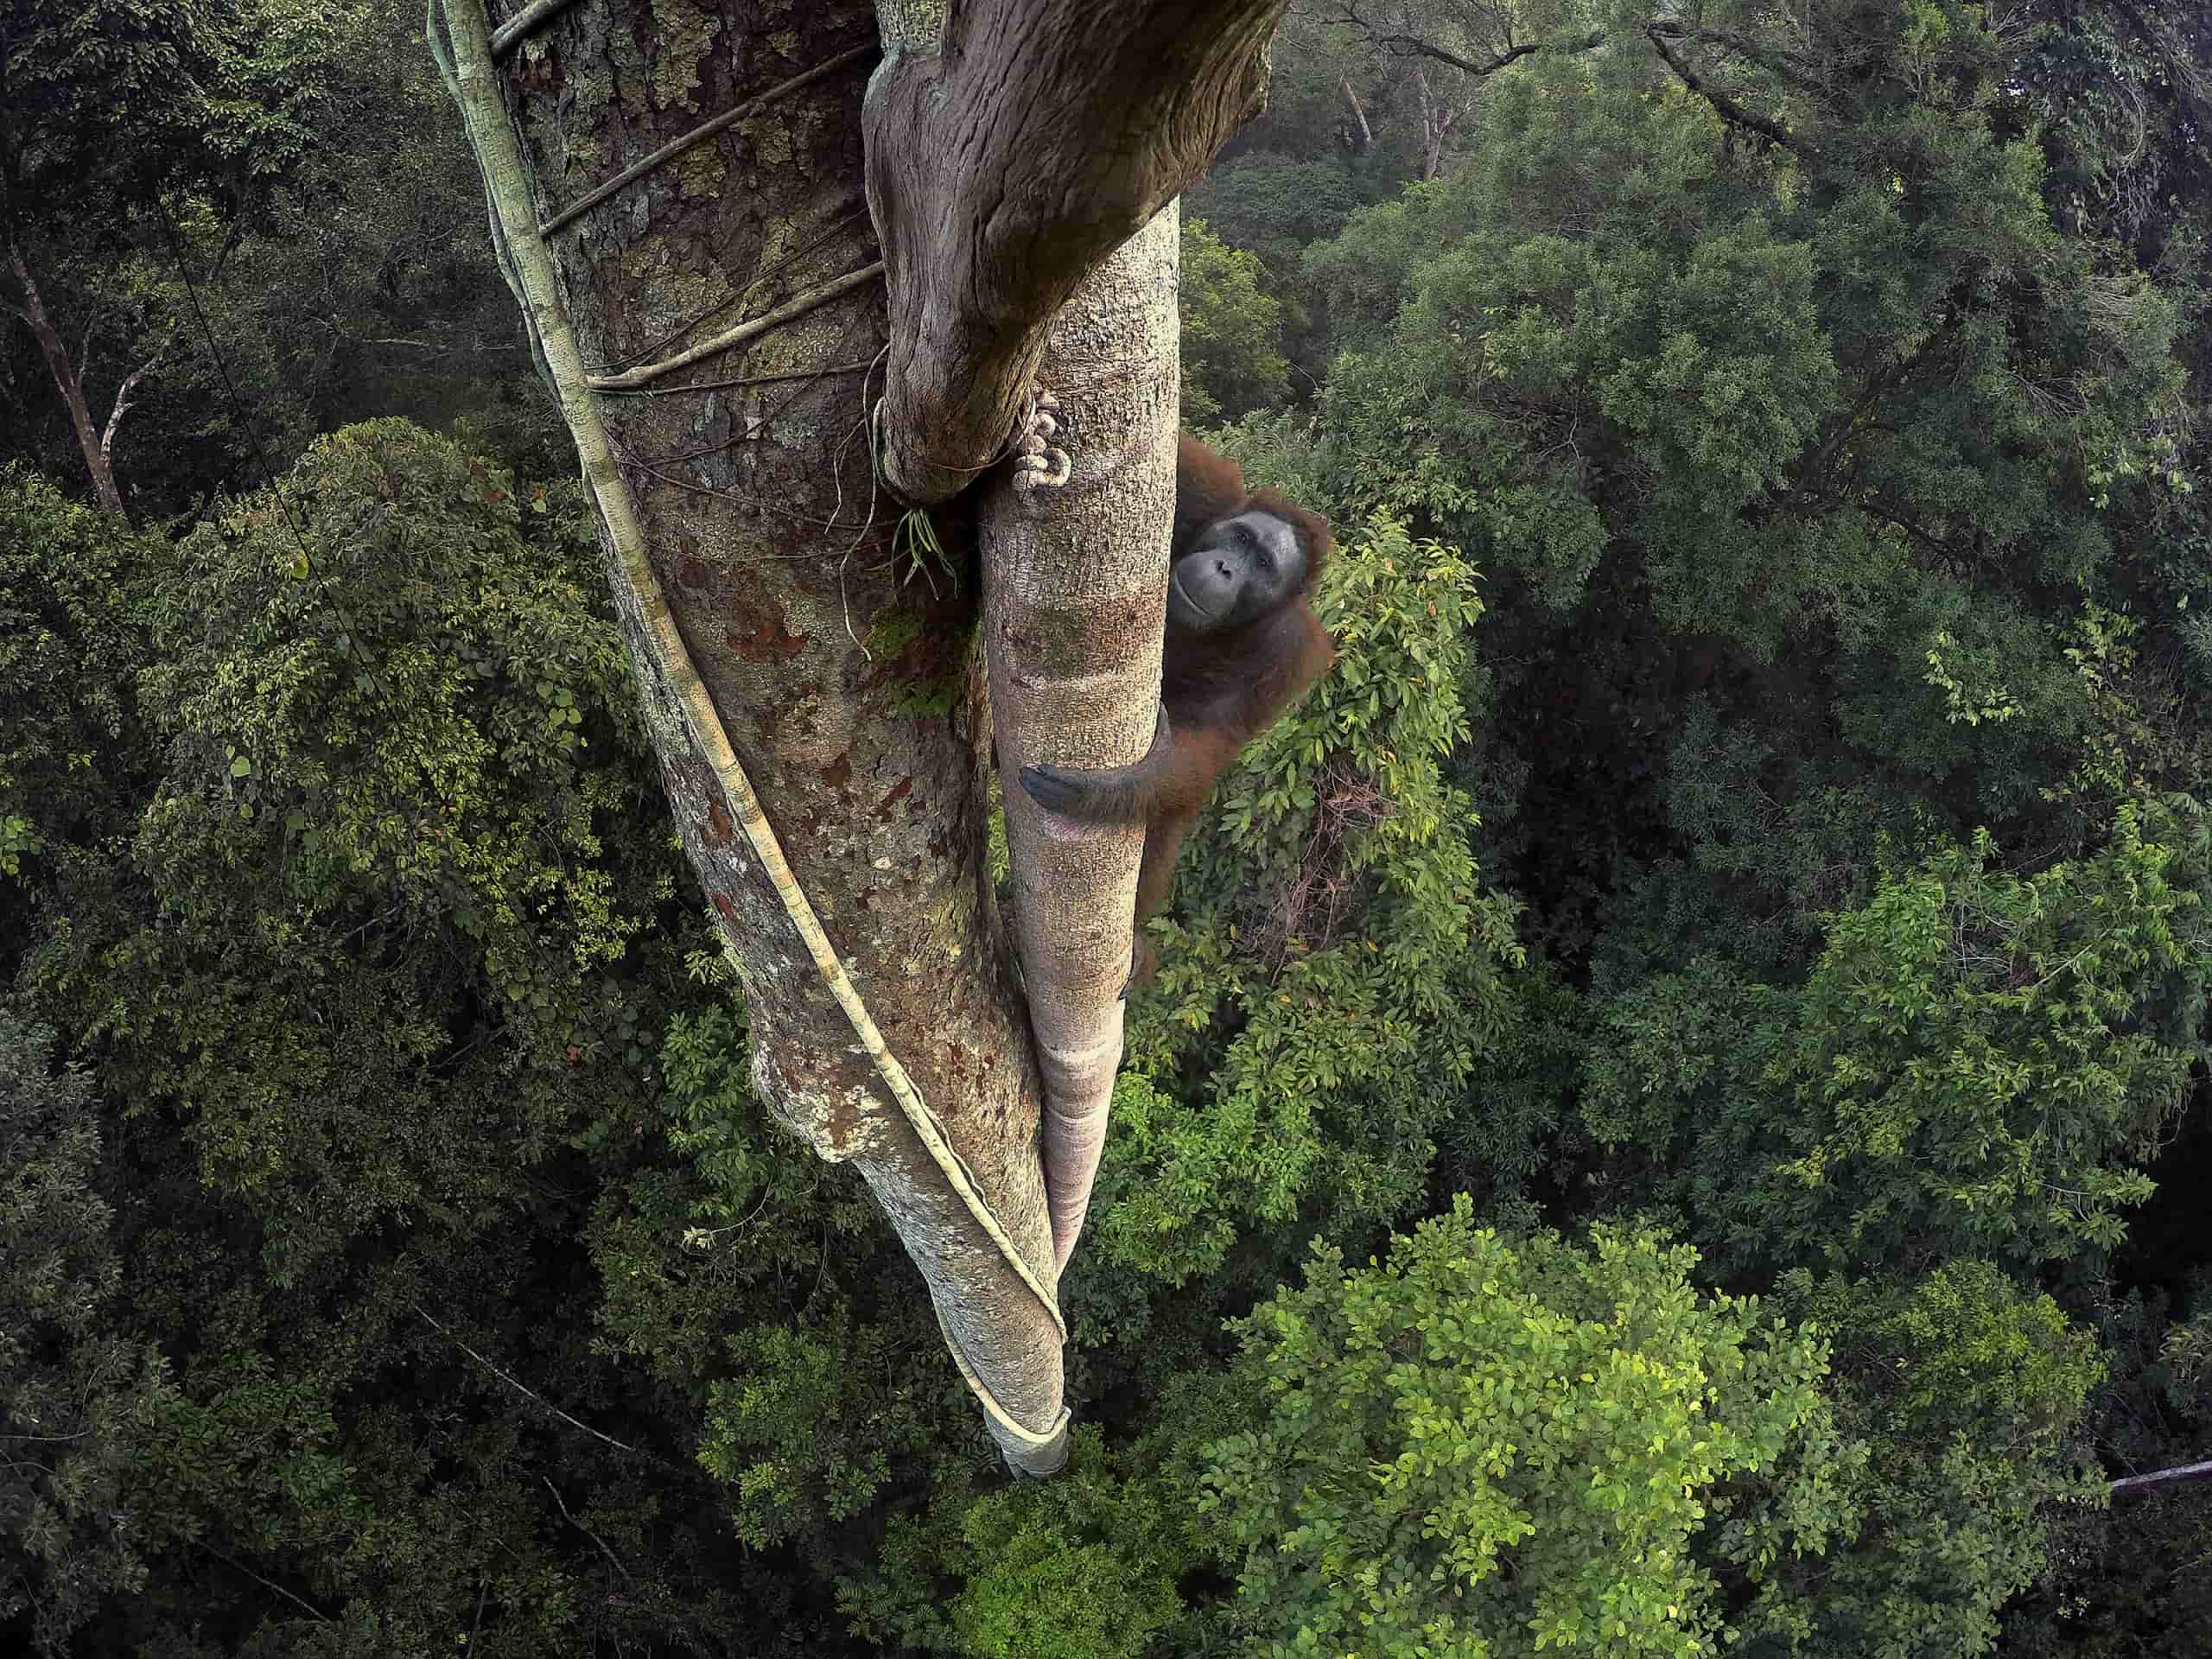 Orangután de Borneo Kalimantan, Borneo (Indonesia). Fotógrafo: Tim Laman / National Geographic.